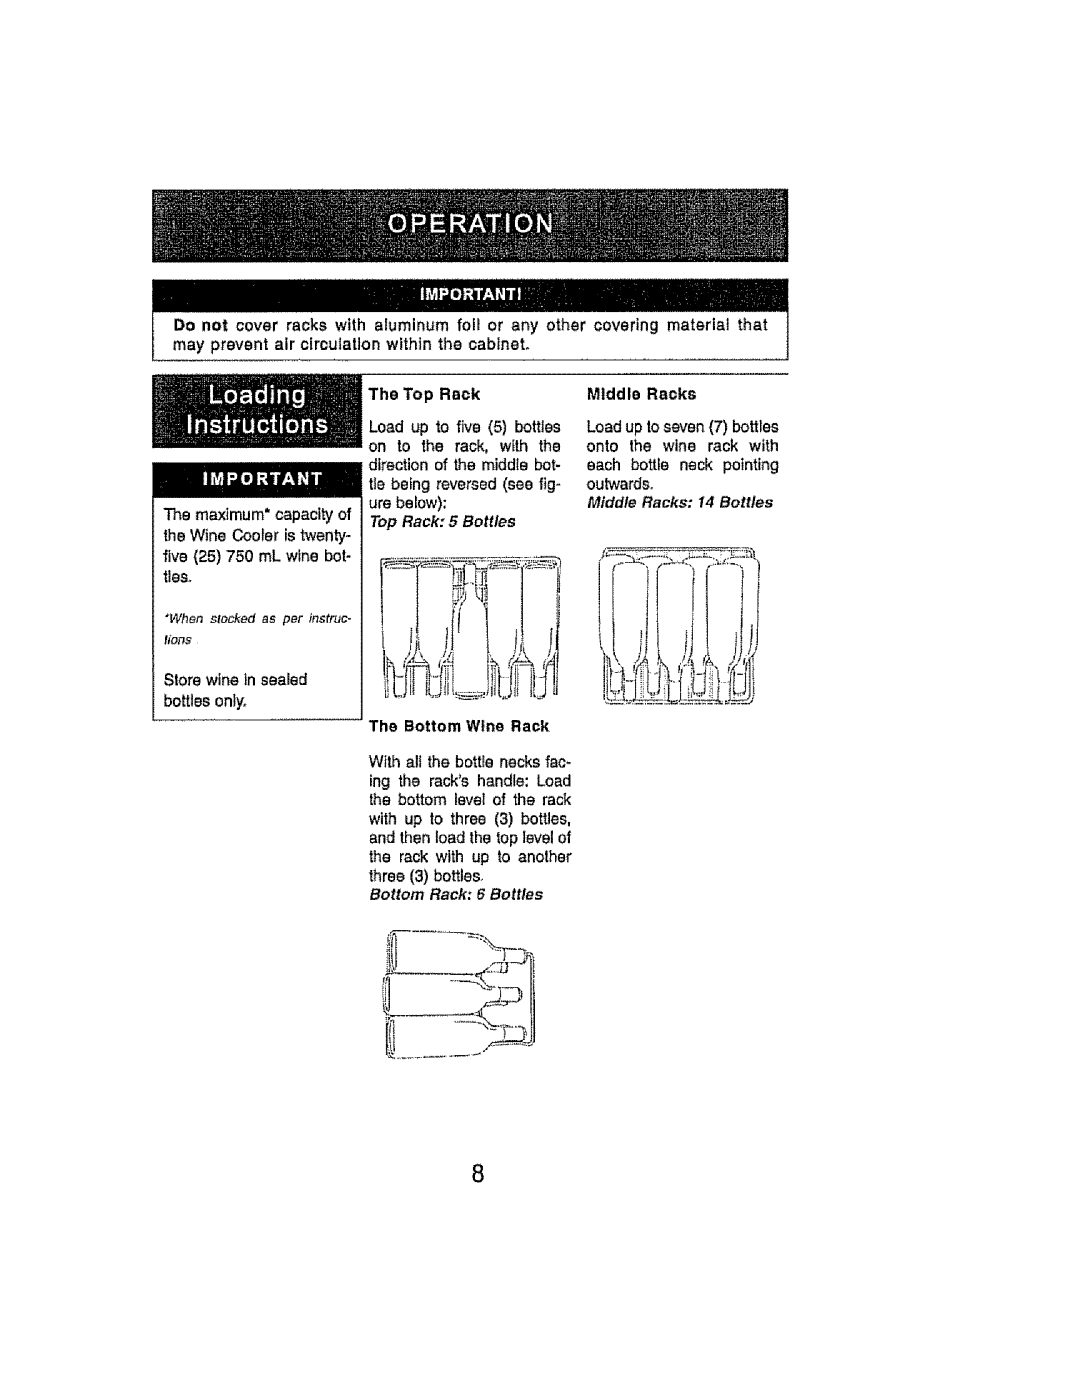 Kenmore 461.99609 manual ILJl 1.jfi, The Top Rack, covering material that Middle Racks, Middle Racks 14 Bottles 